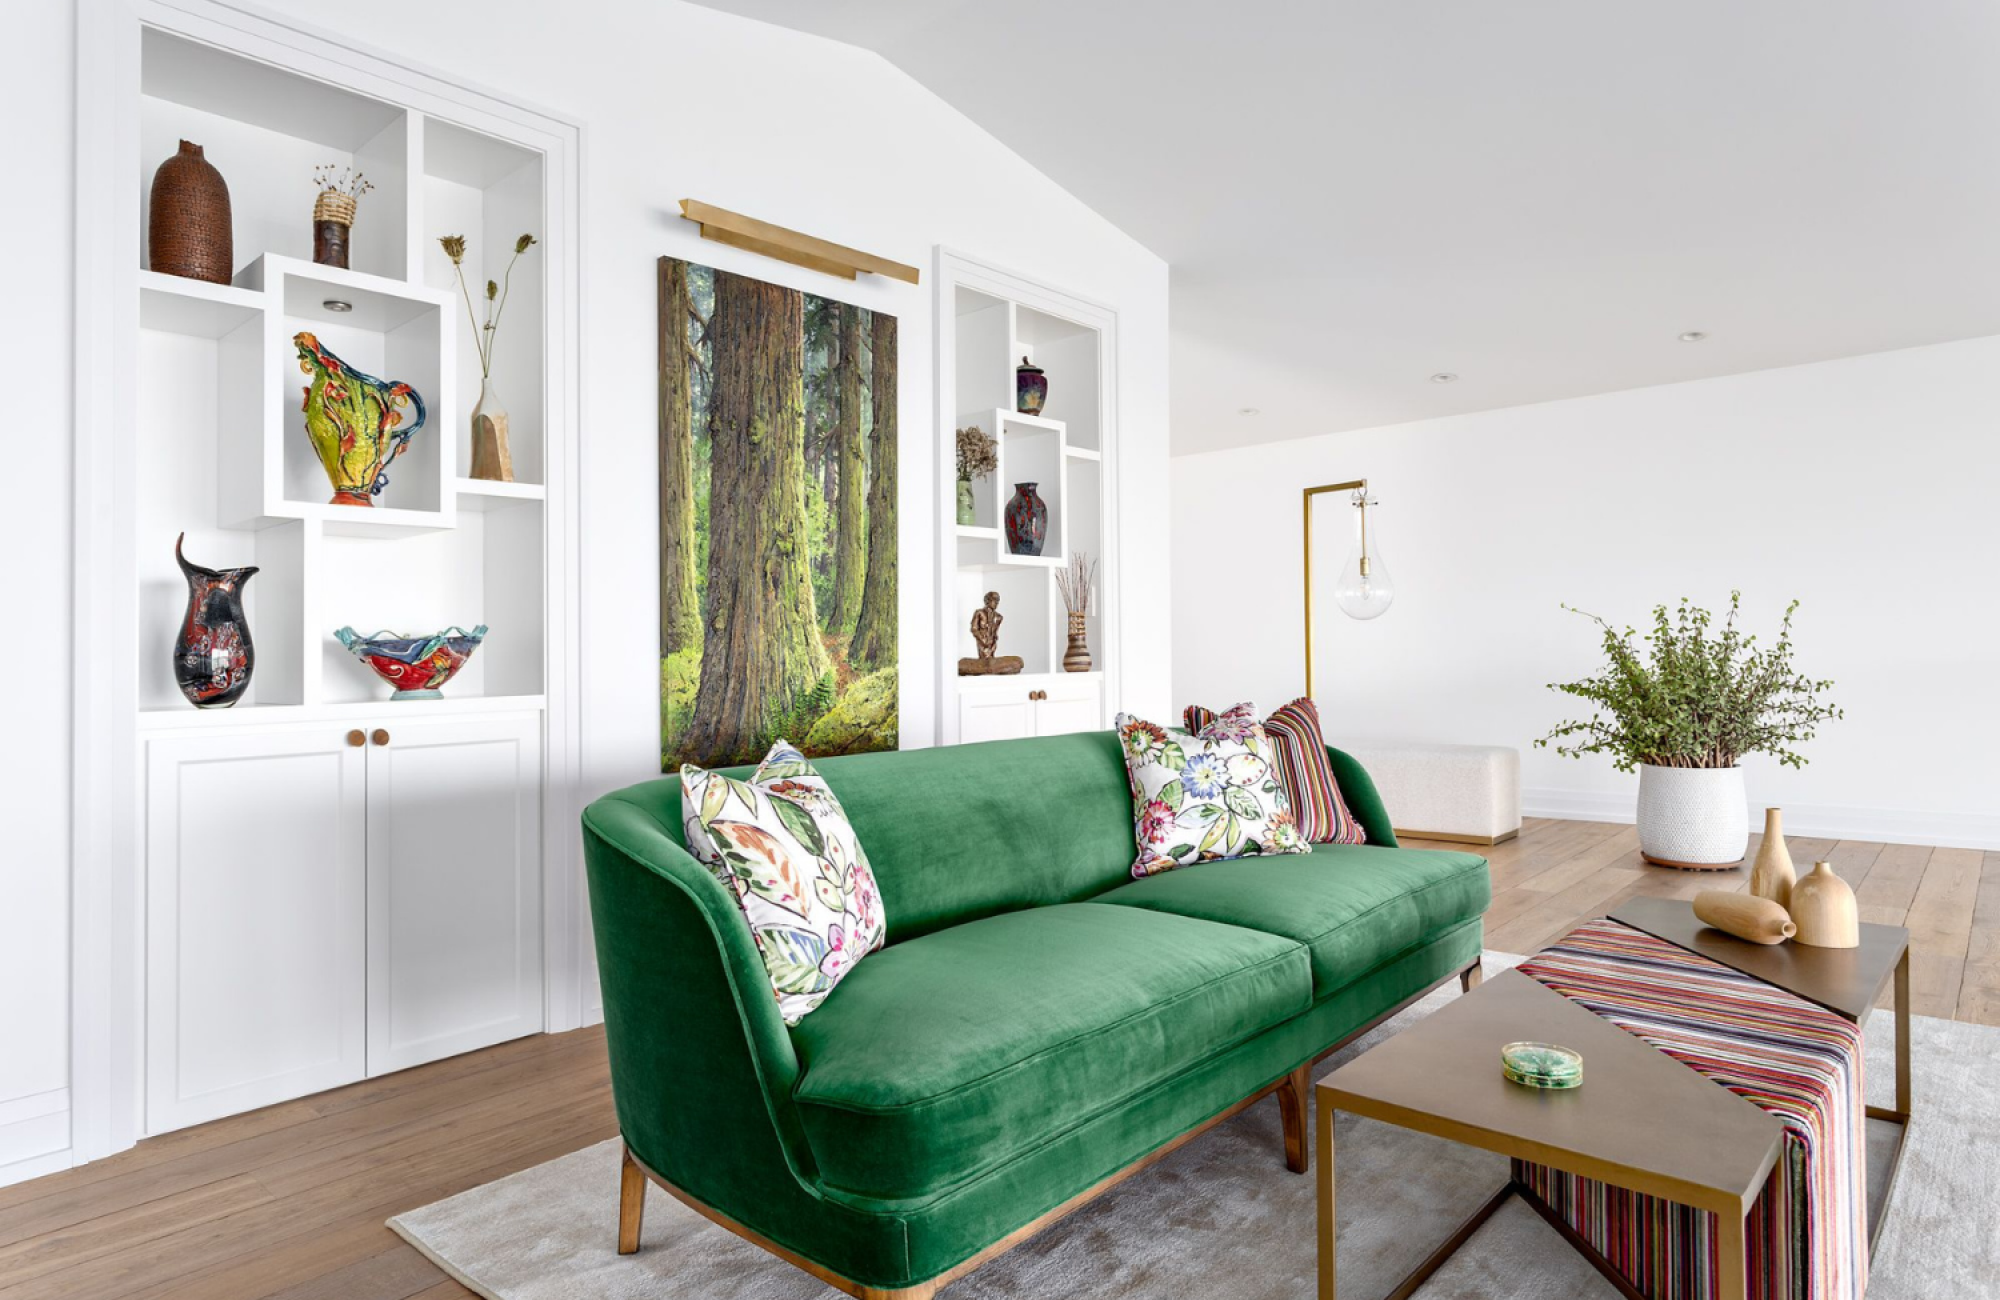 furnish a whole home green sofa custom recessed shelving warm tree artwork nature inspired home